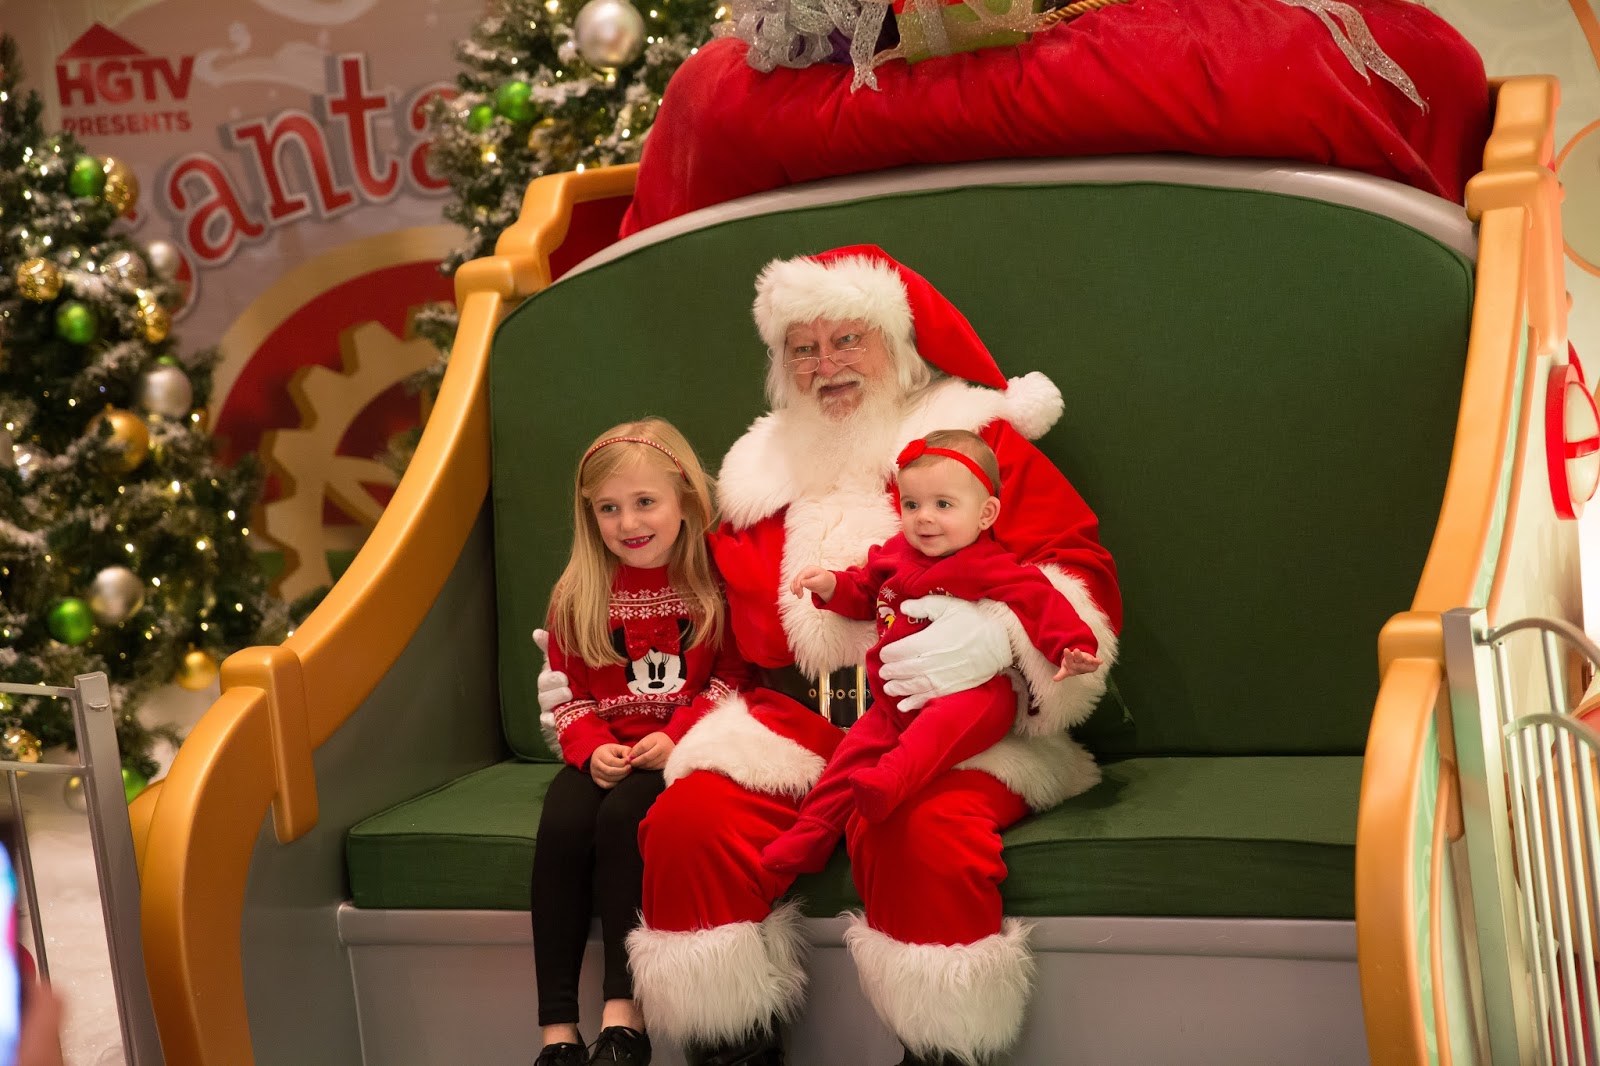 HGTV's 'Santa HQ' Experience Brings Festive Family Fun to 15 Macerich Malls  This Holiday Season